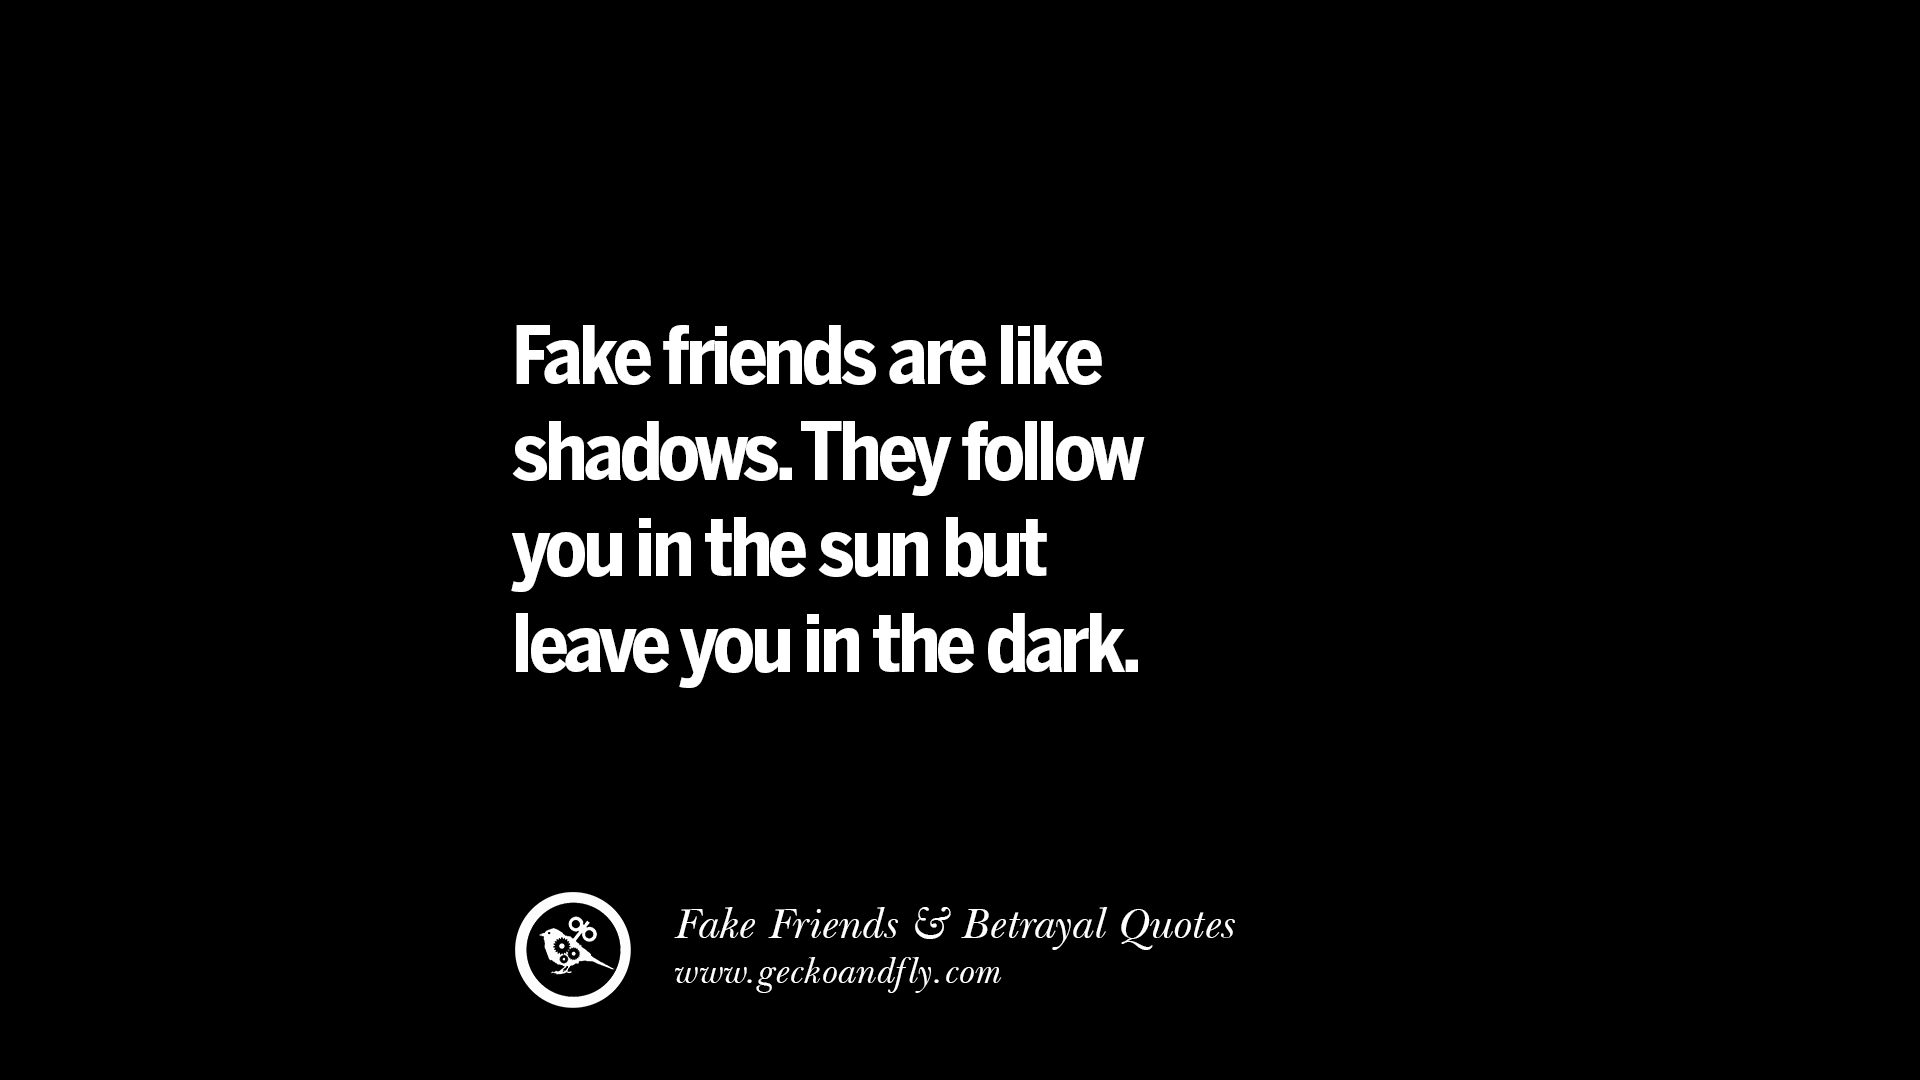 Fake friends are like shadows. 